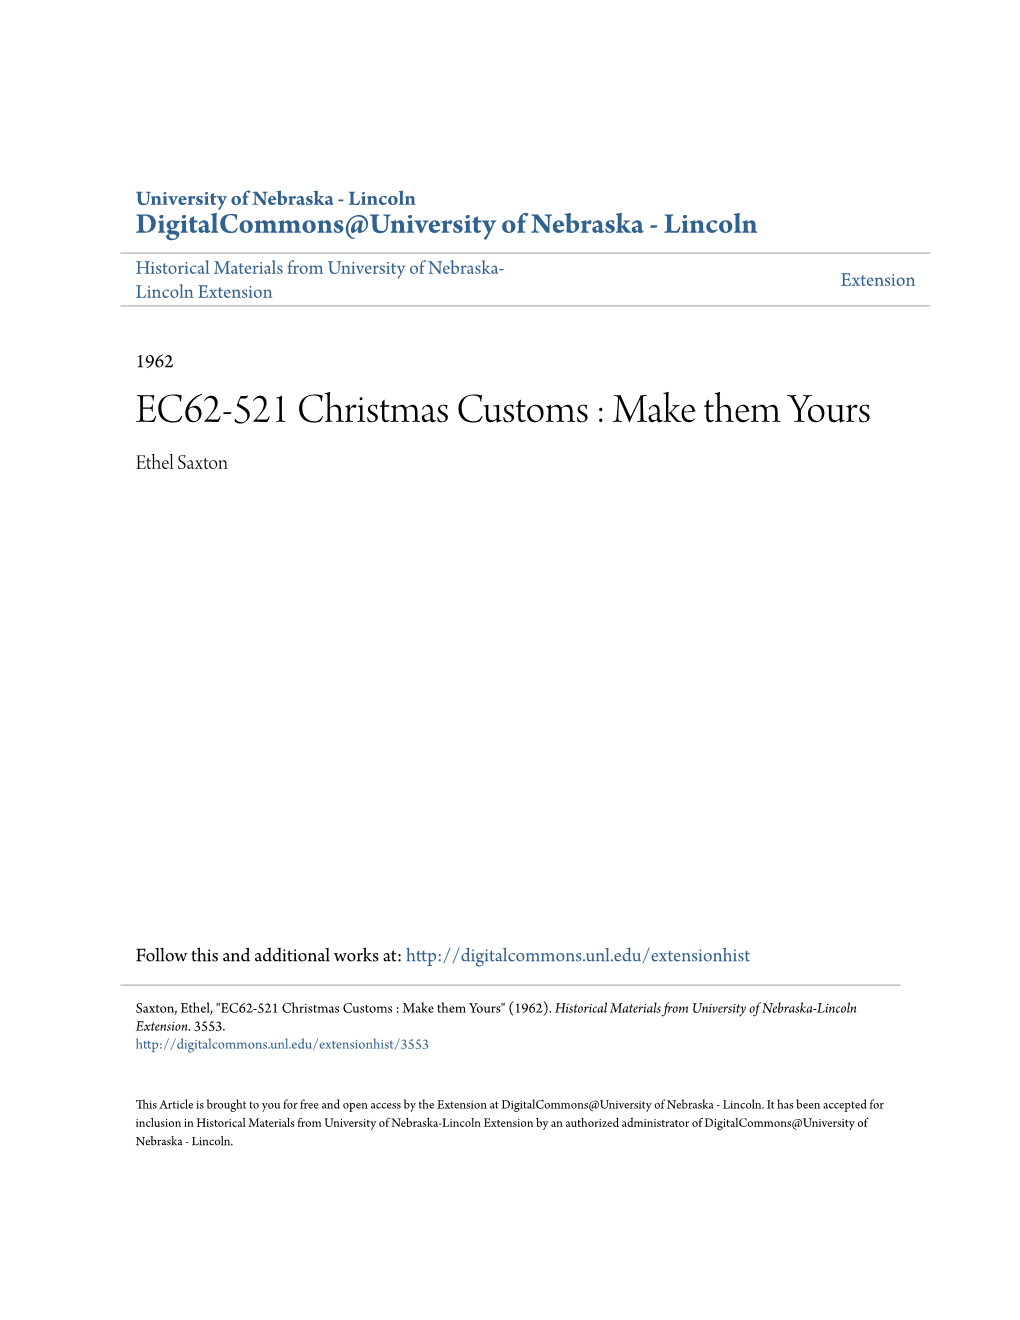 EC62-521 Christmas Customs: Make Them Yours